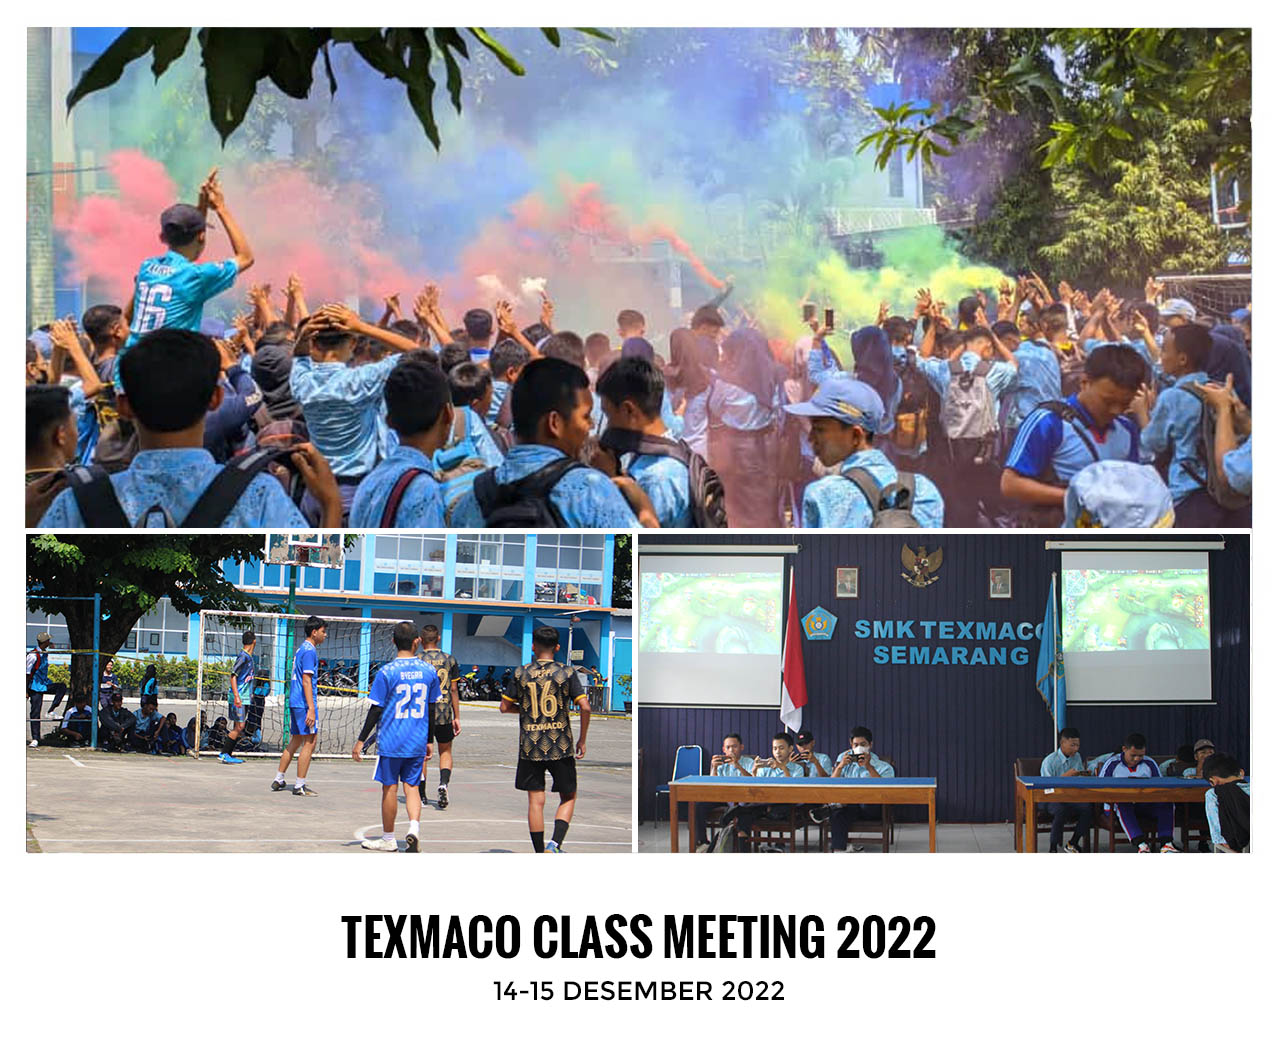 TEXMACO CLASS MEETING 2022